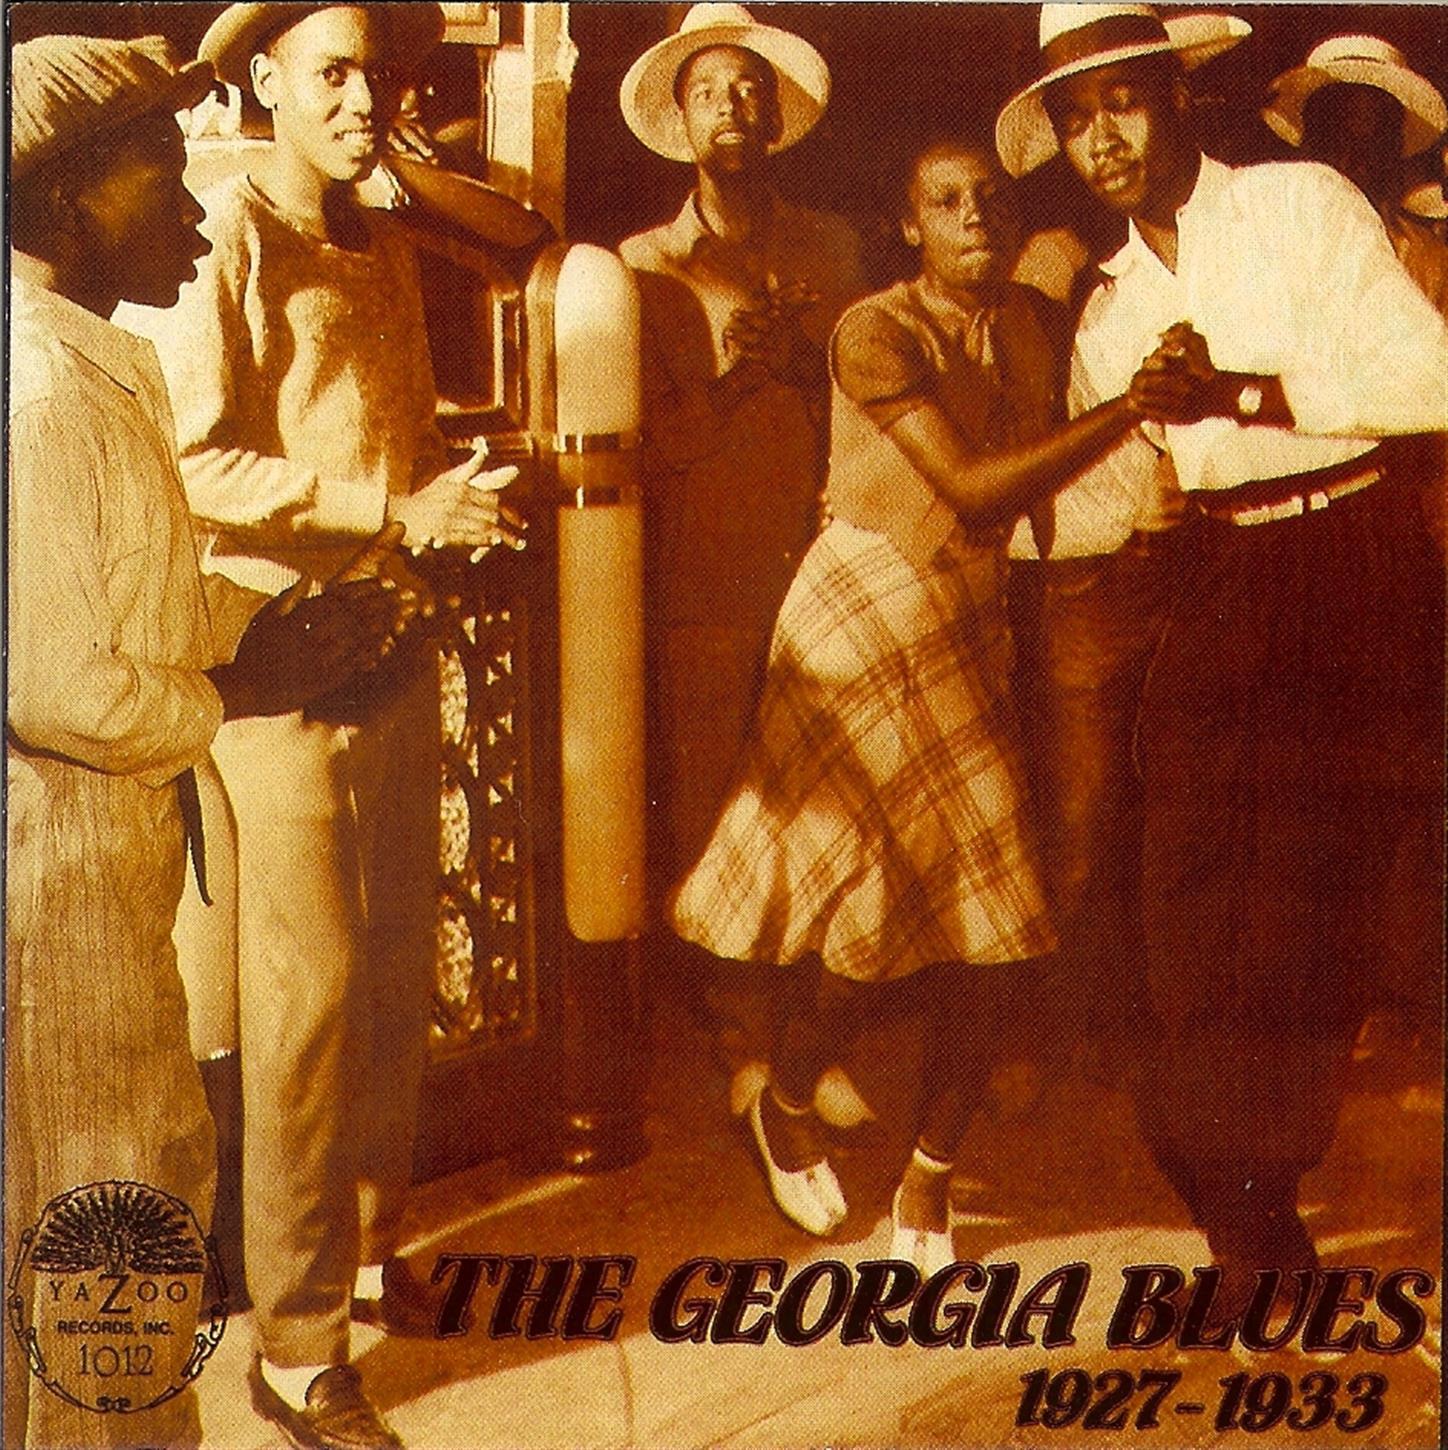 The Georgia Blues (1927-1933)